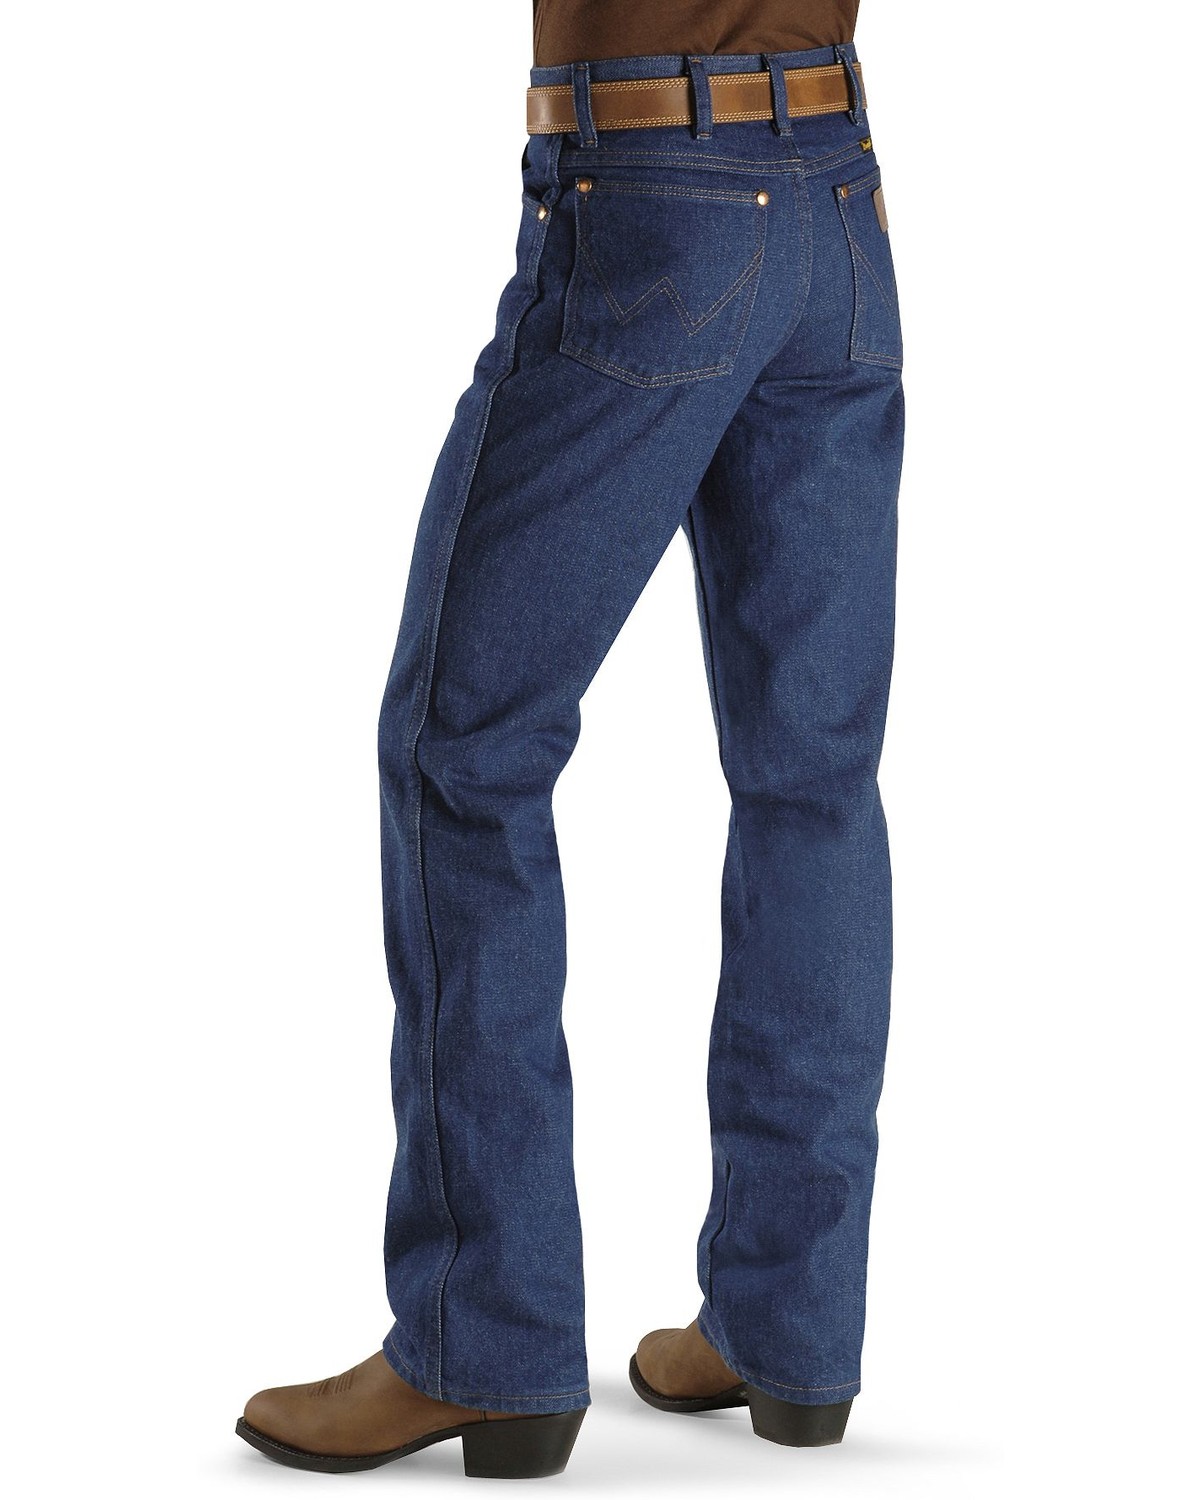 Wrangler Jeans - Students 13MWZ | Sheplers